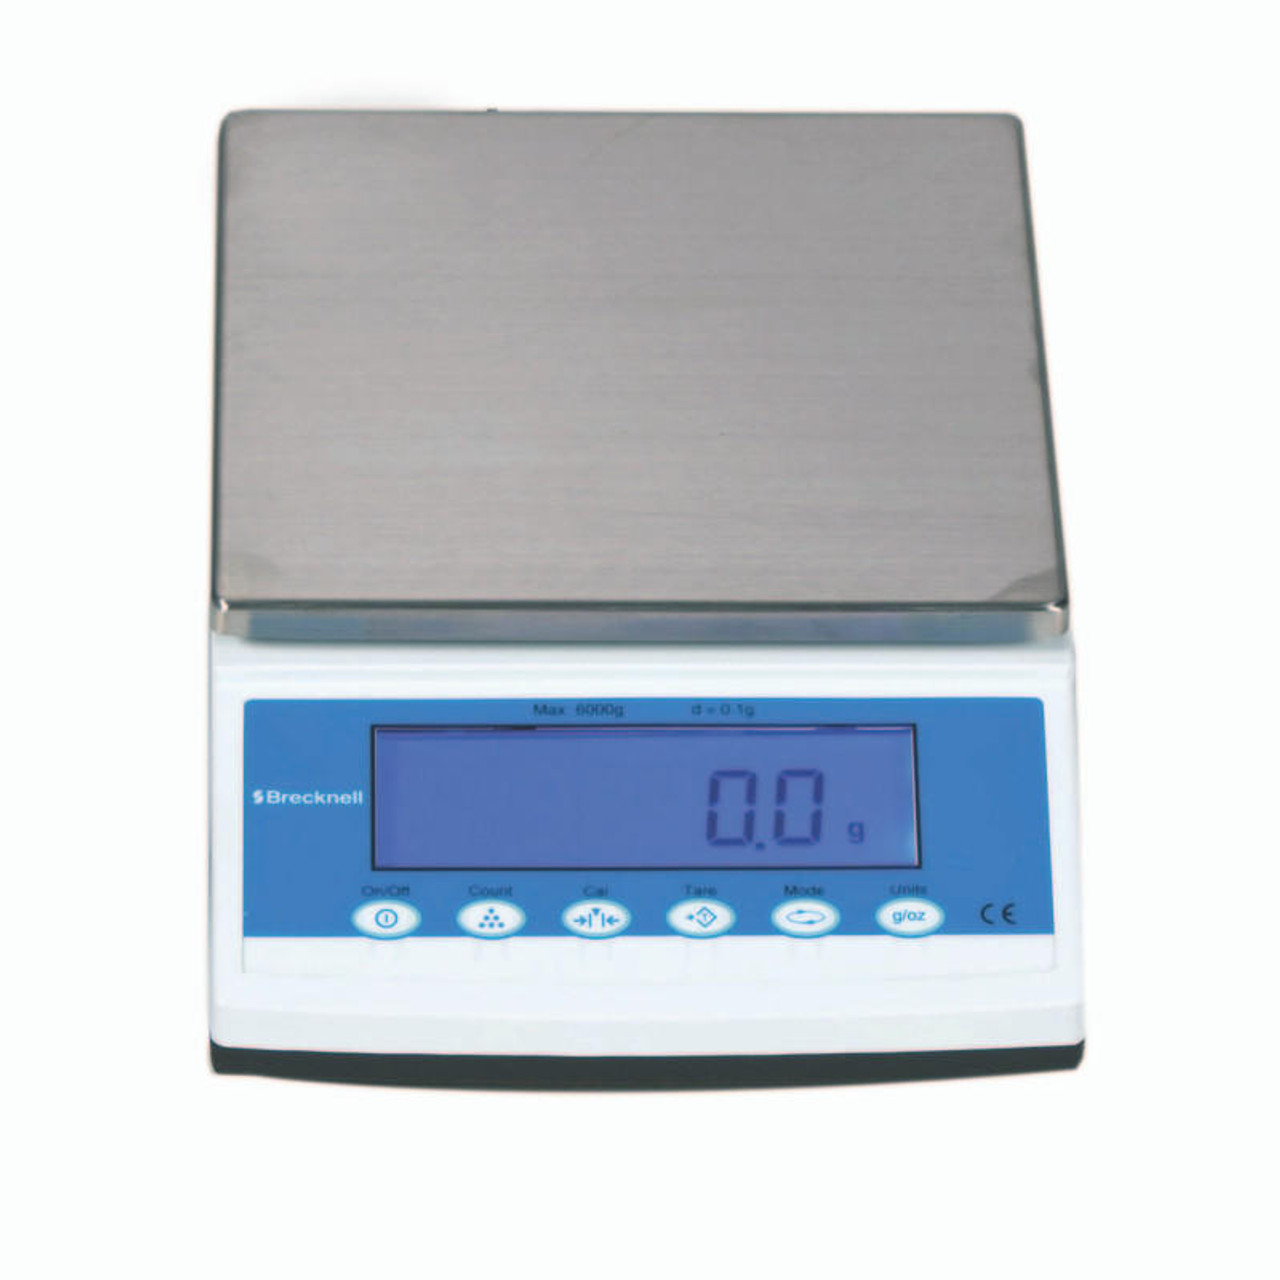 Weighing Scale vs Weighing Balance –